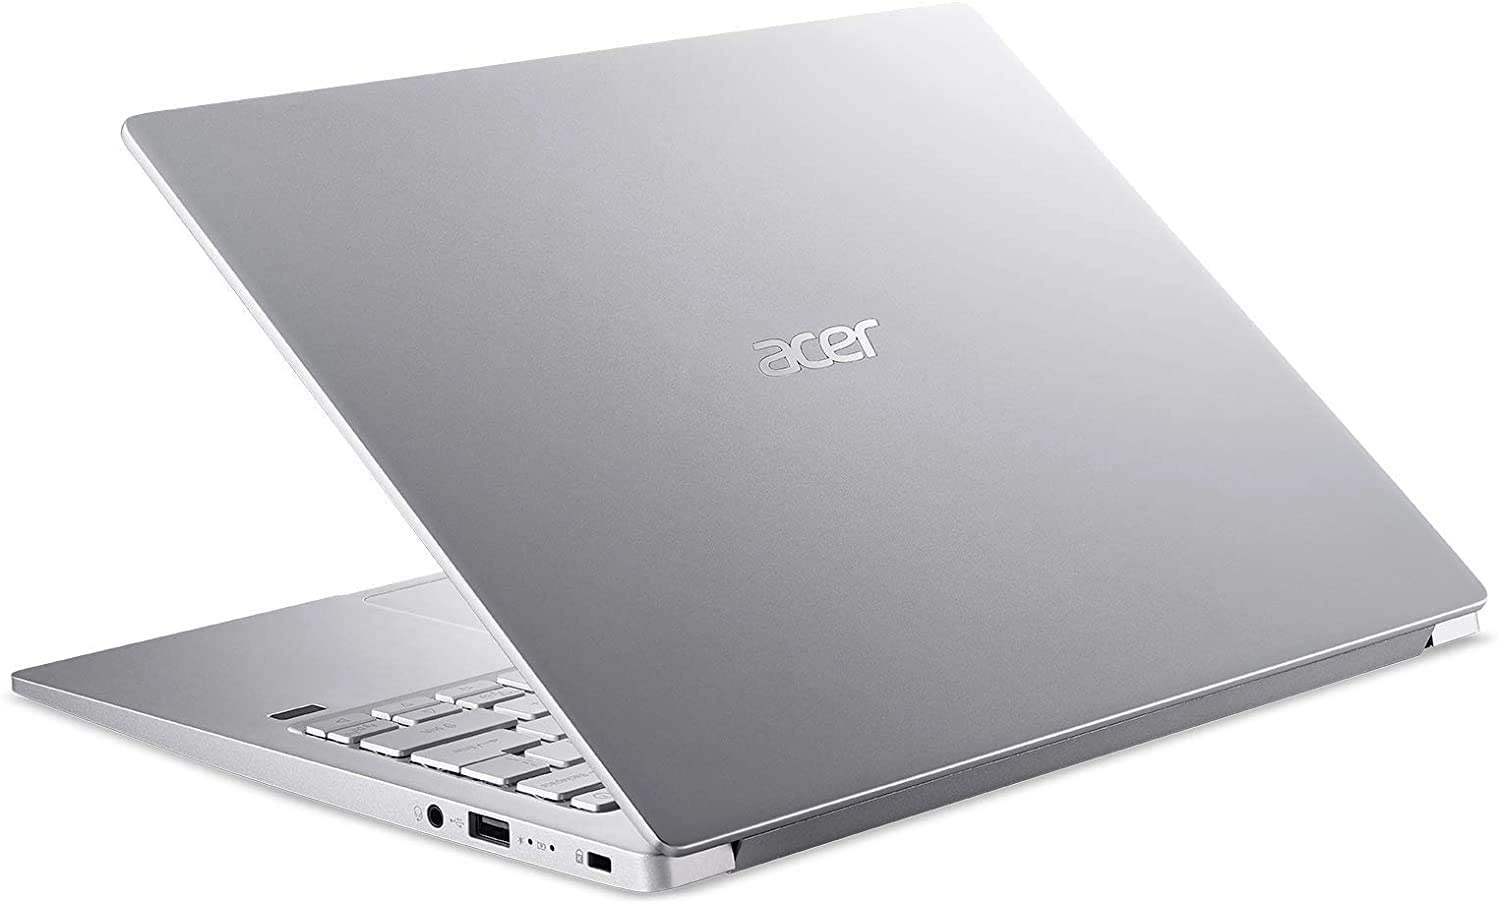 Acer Swift 3 laptop image